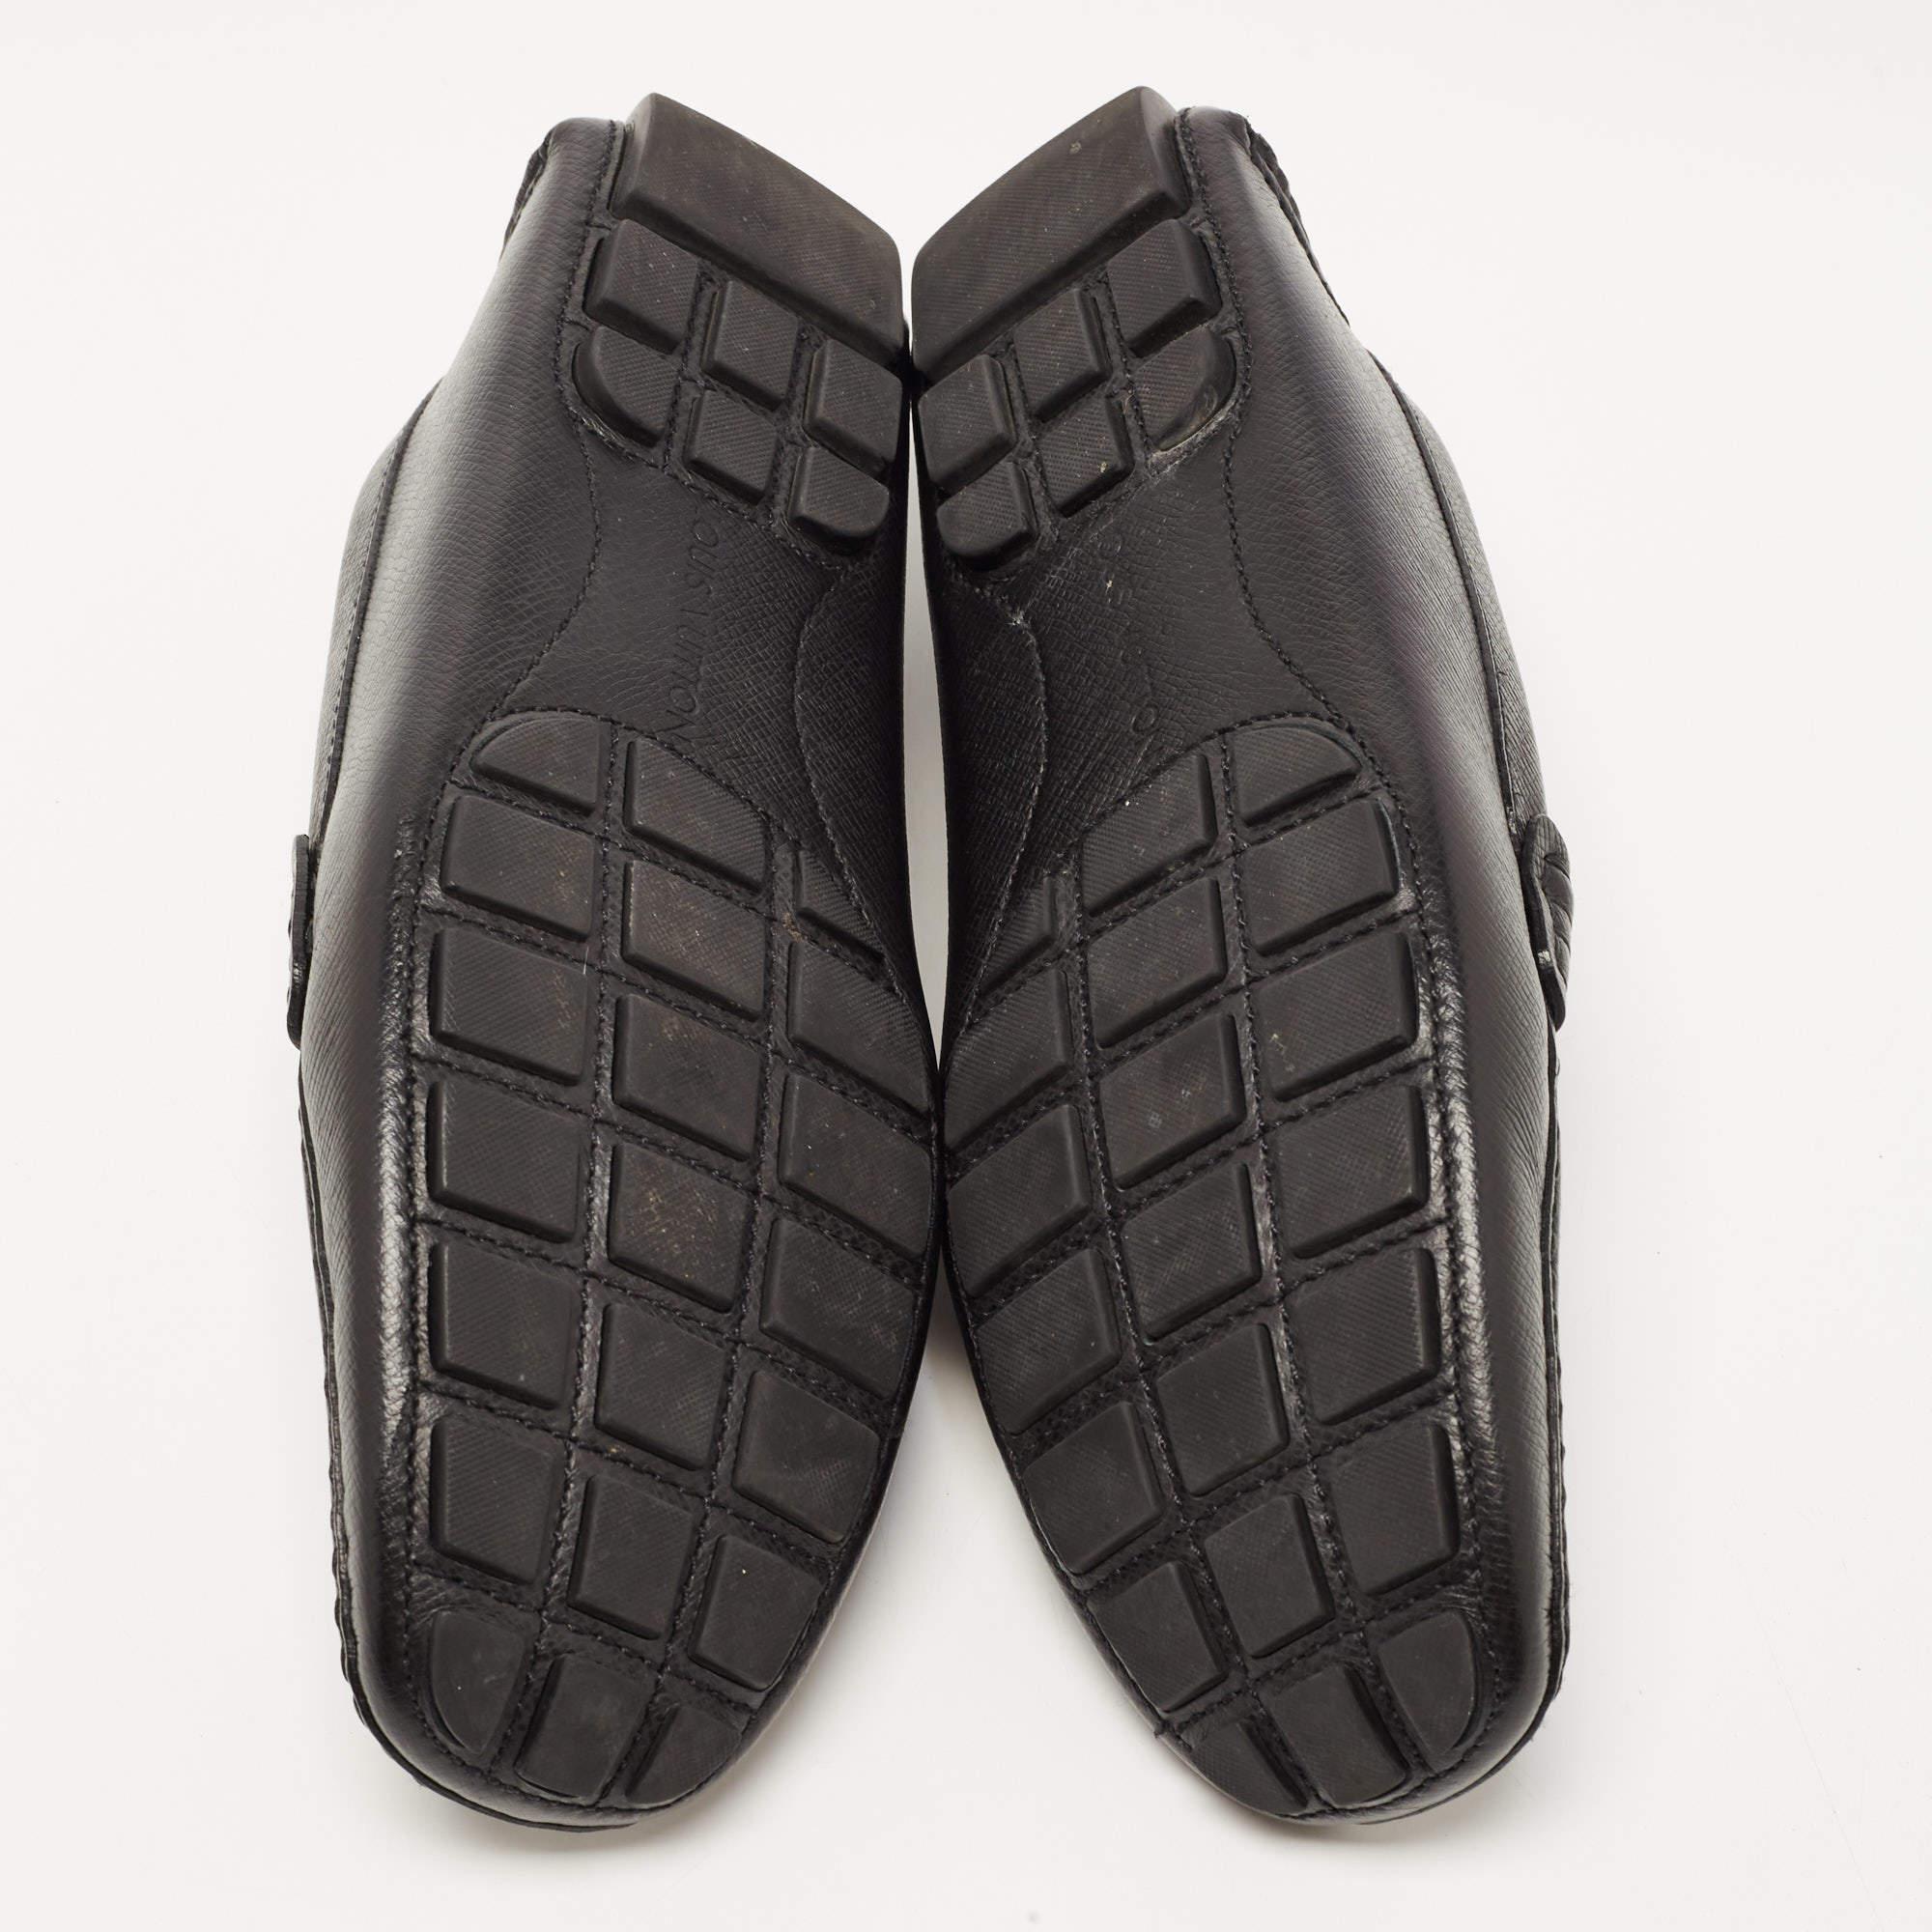 Men's Louis Vuitton Black Leather Monte Carlo Slip On Loafers Size 43.5